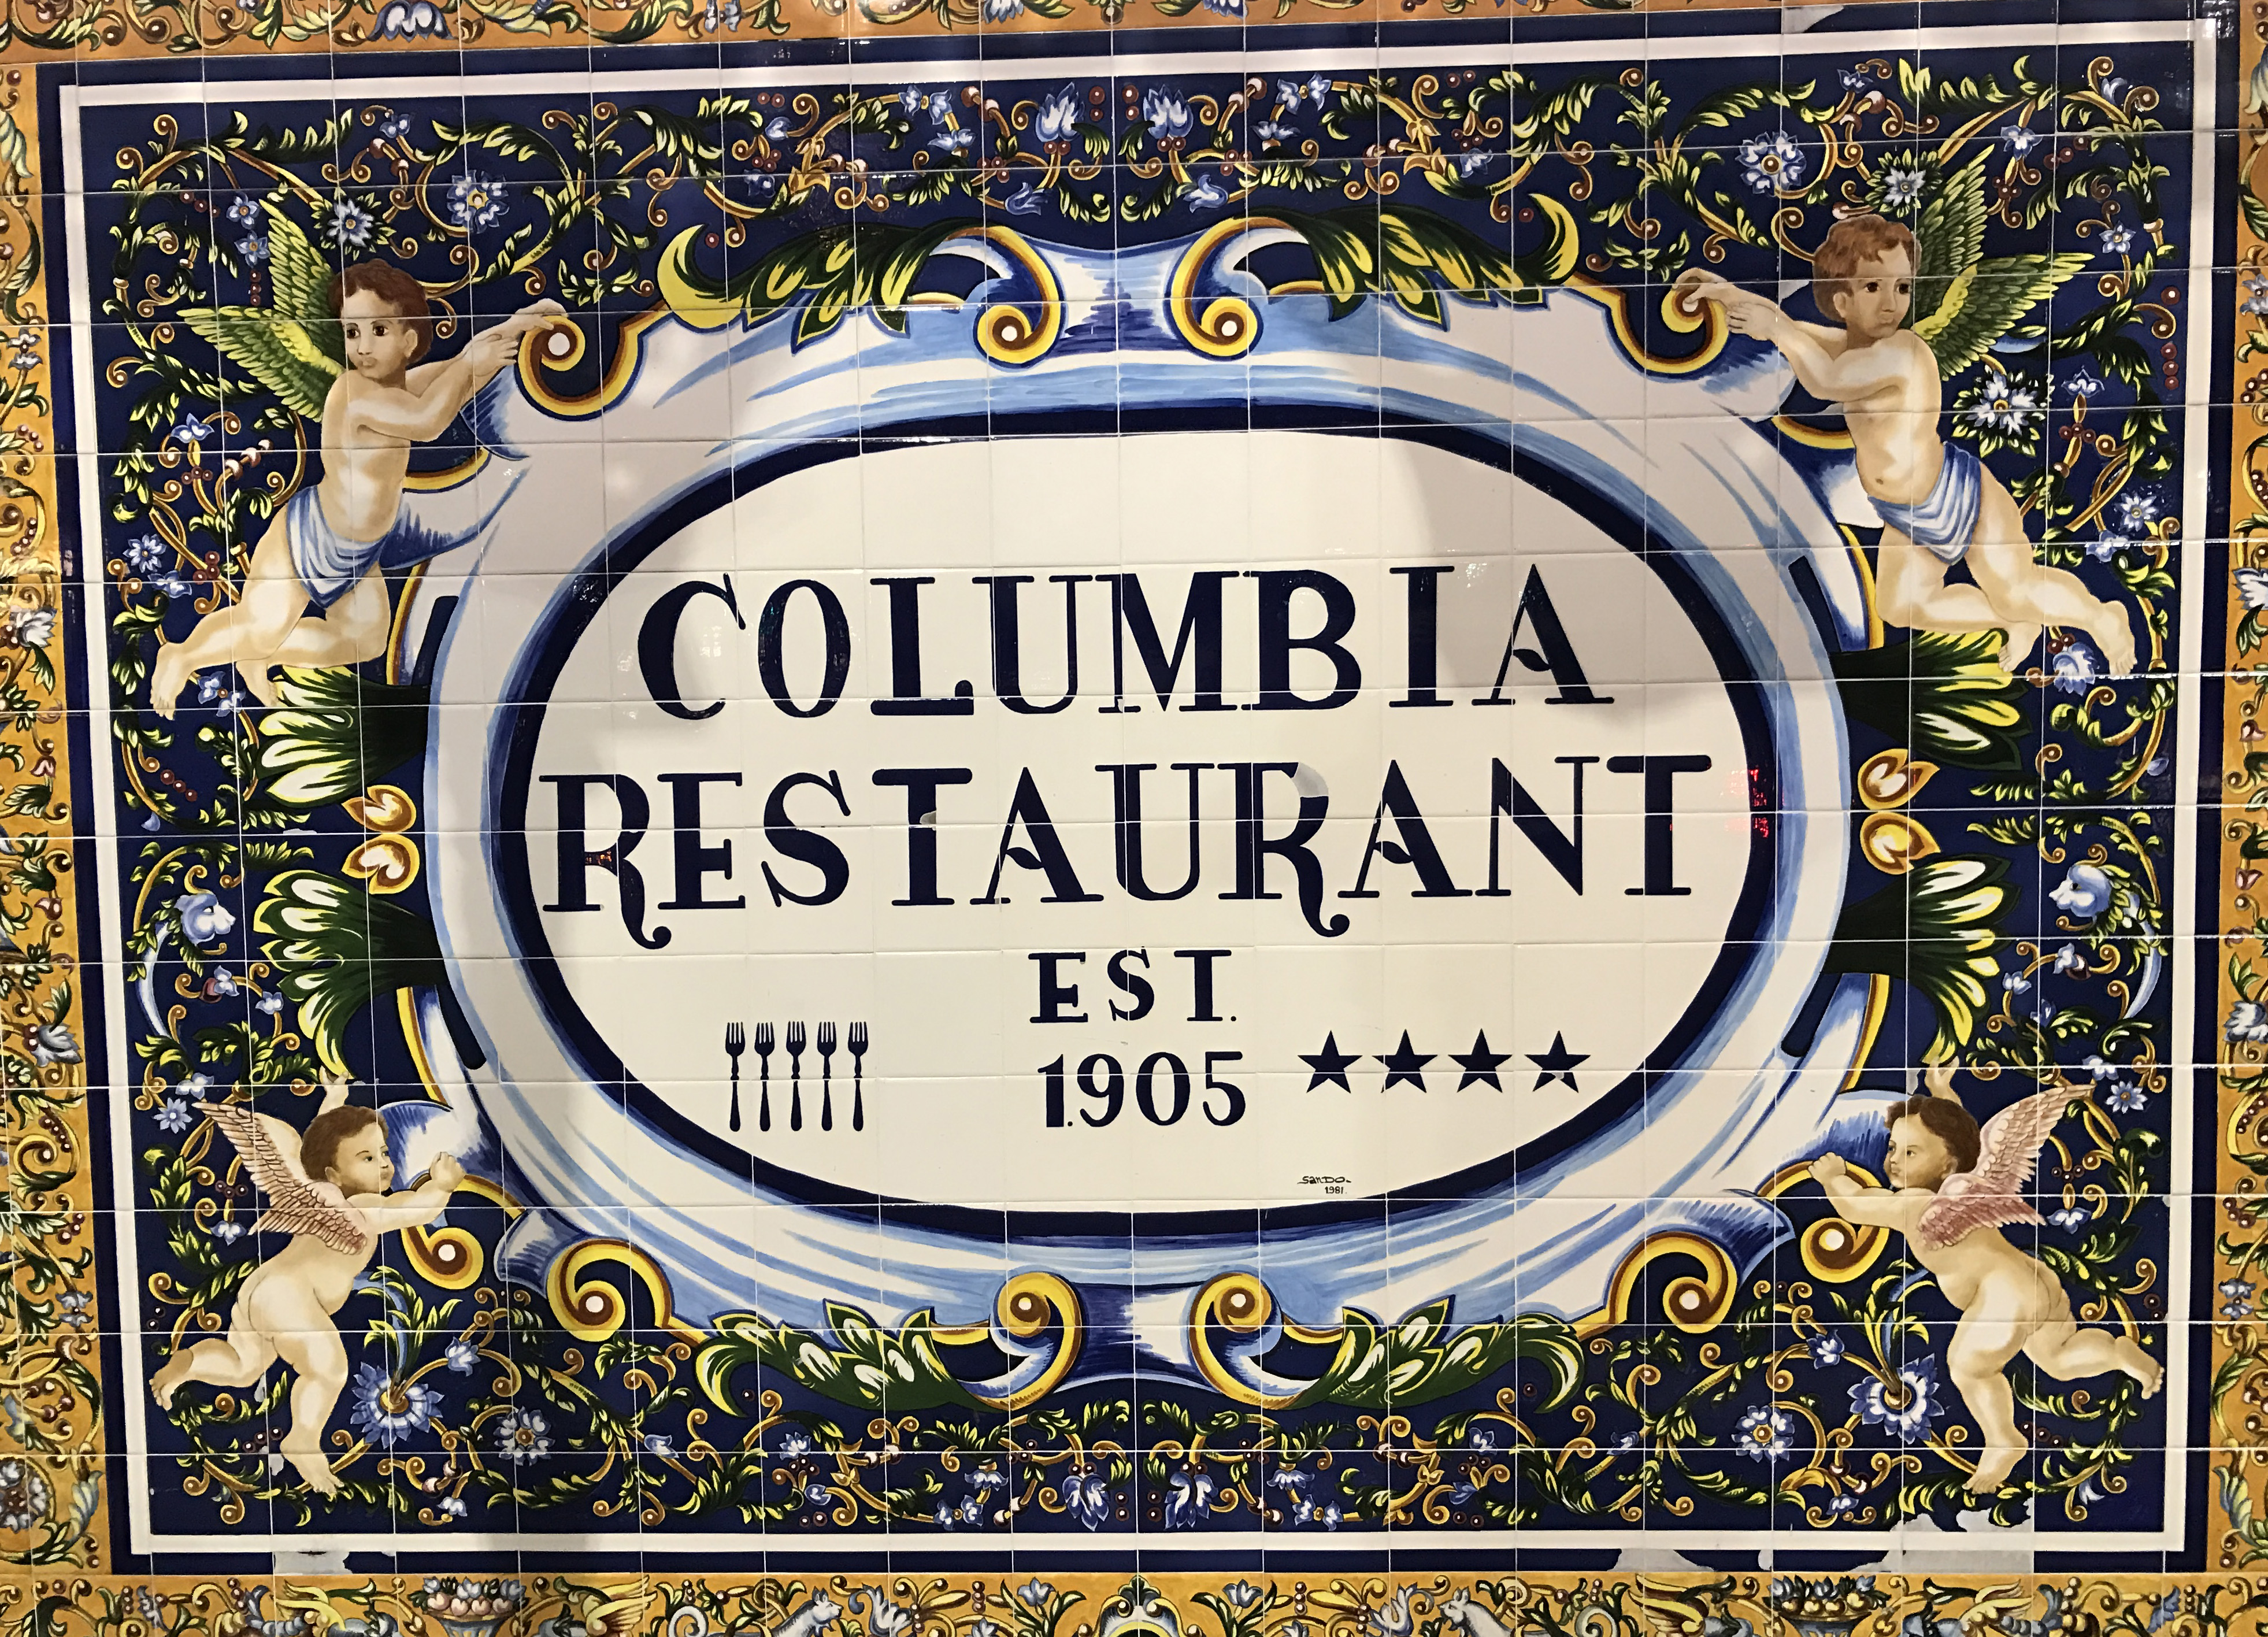 Columbia Restaurant Ybor City